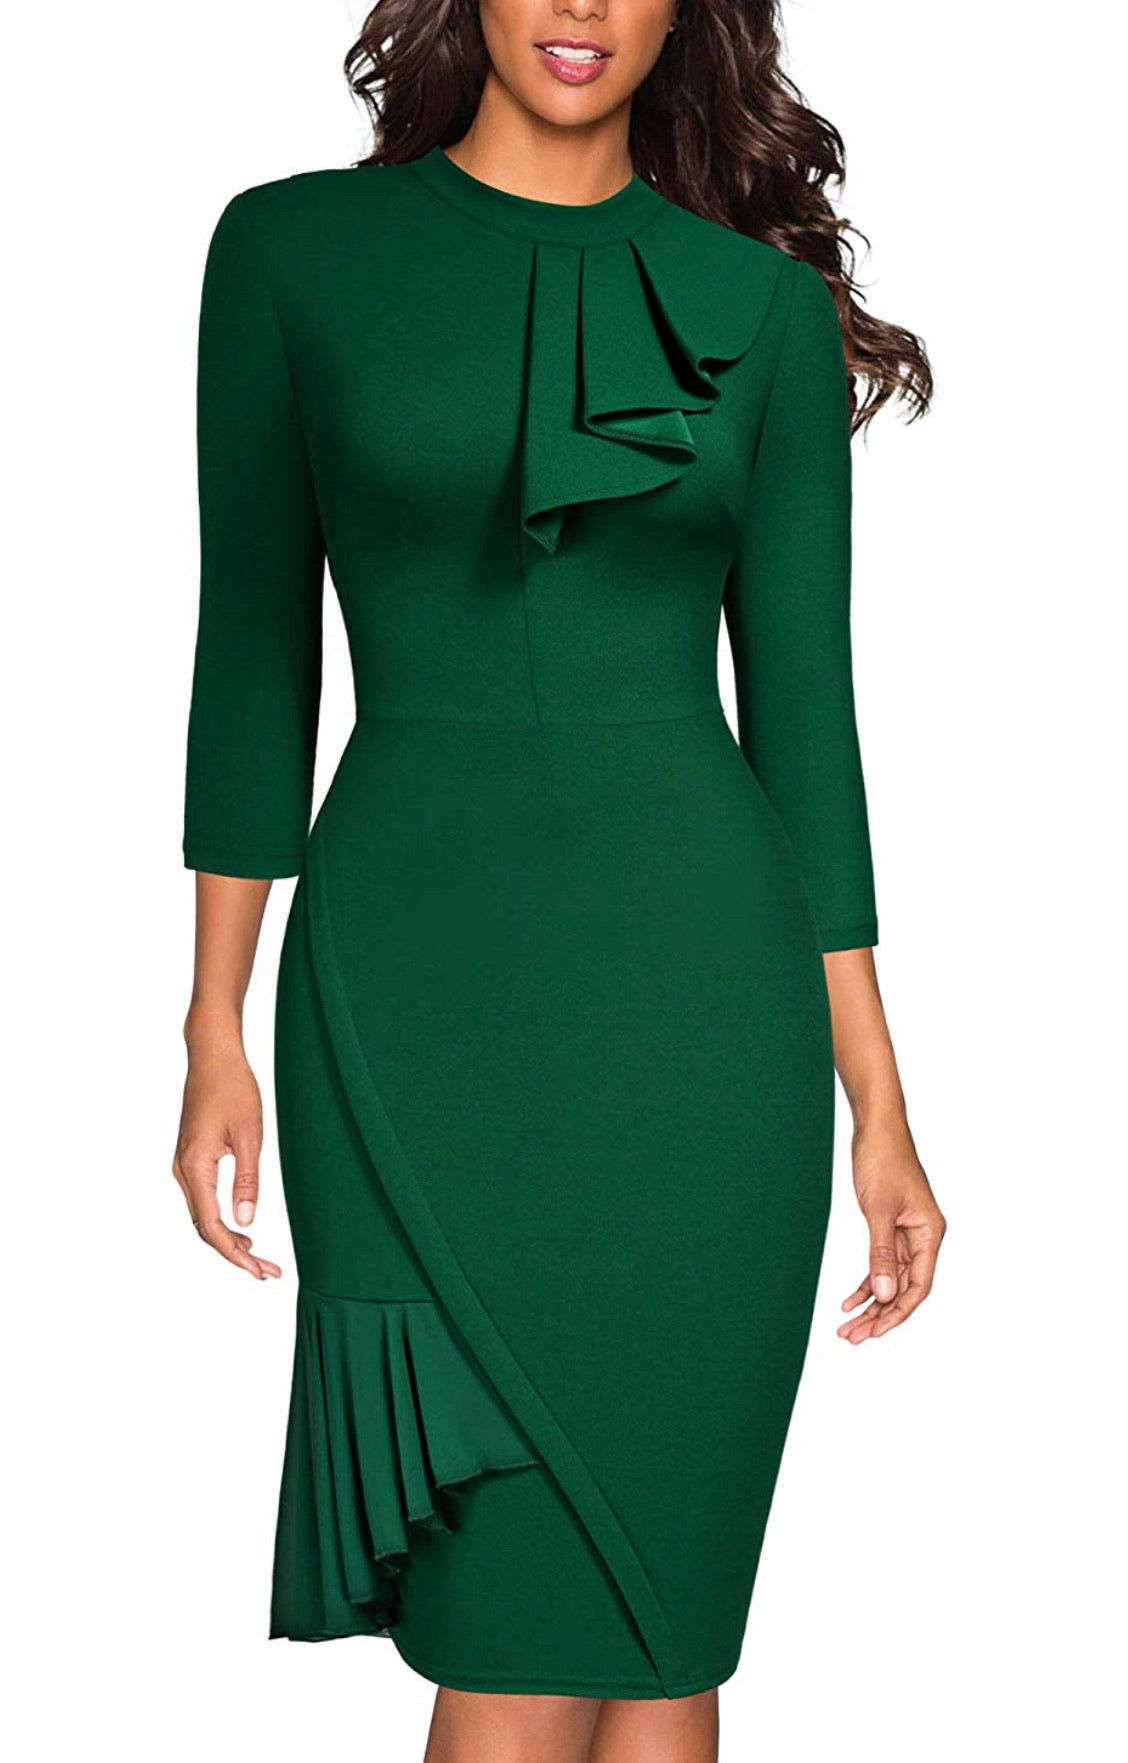 Vintage Inspired Pencil Dress, Sizes US 4 - 18 (Dark Green) – Uylee's ...